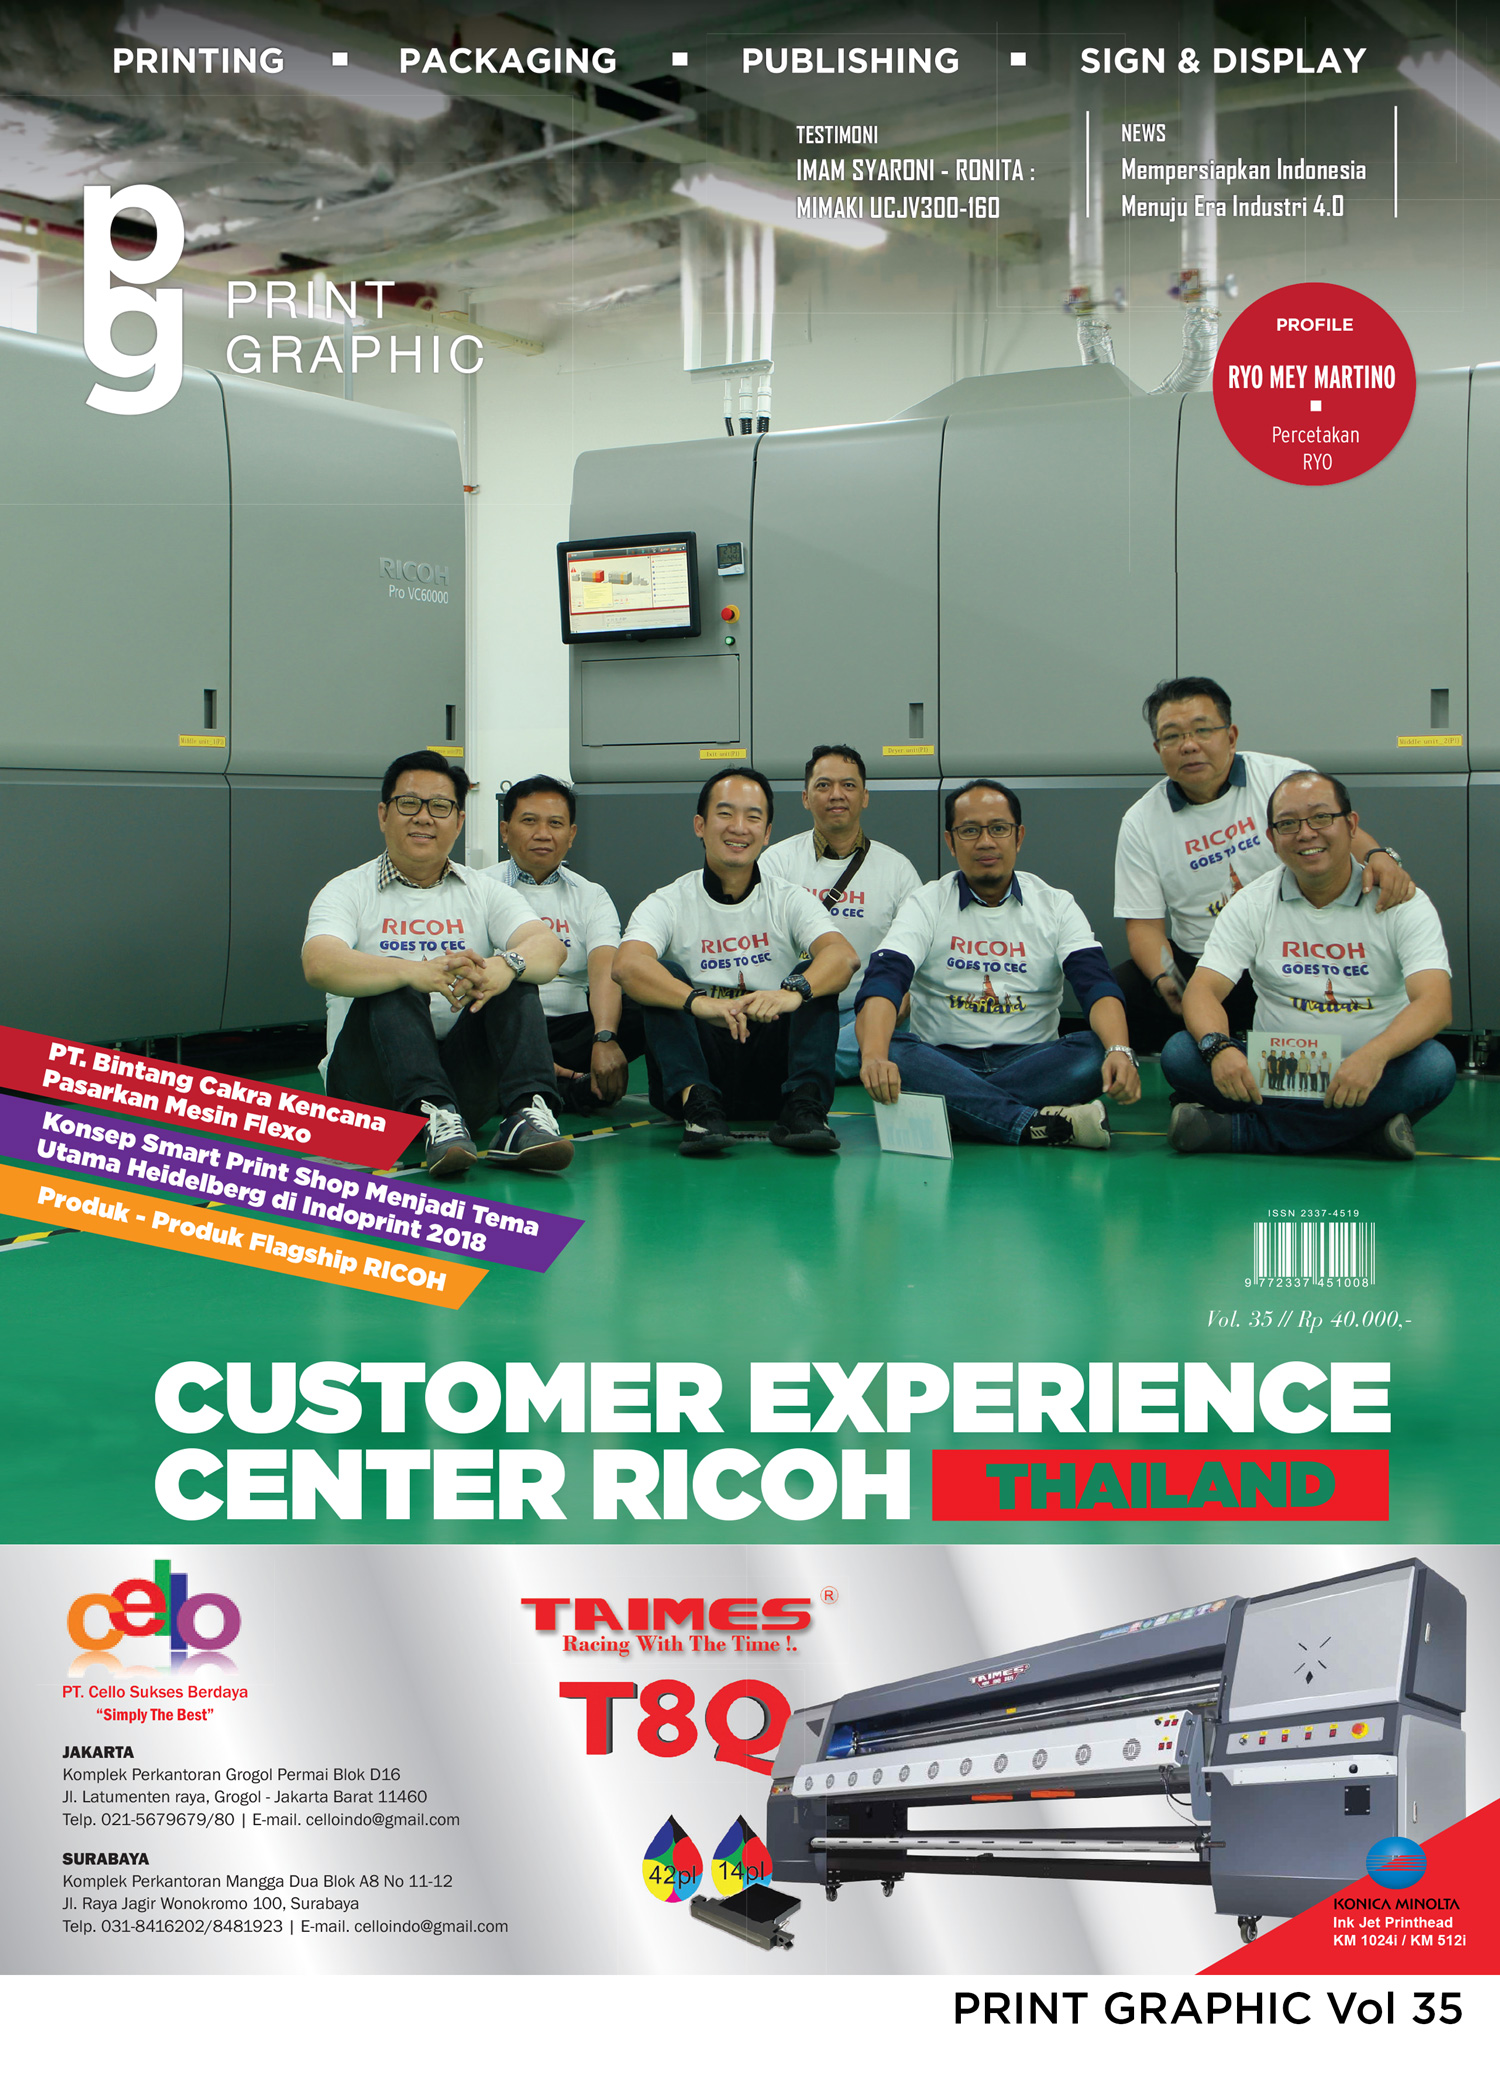 Customer Experience Center Ricoh - Thailand